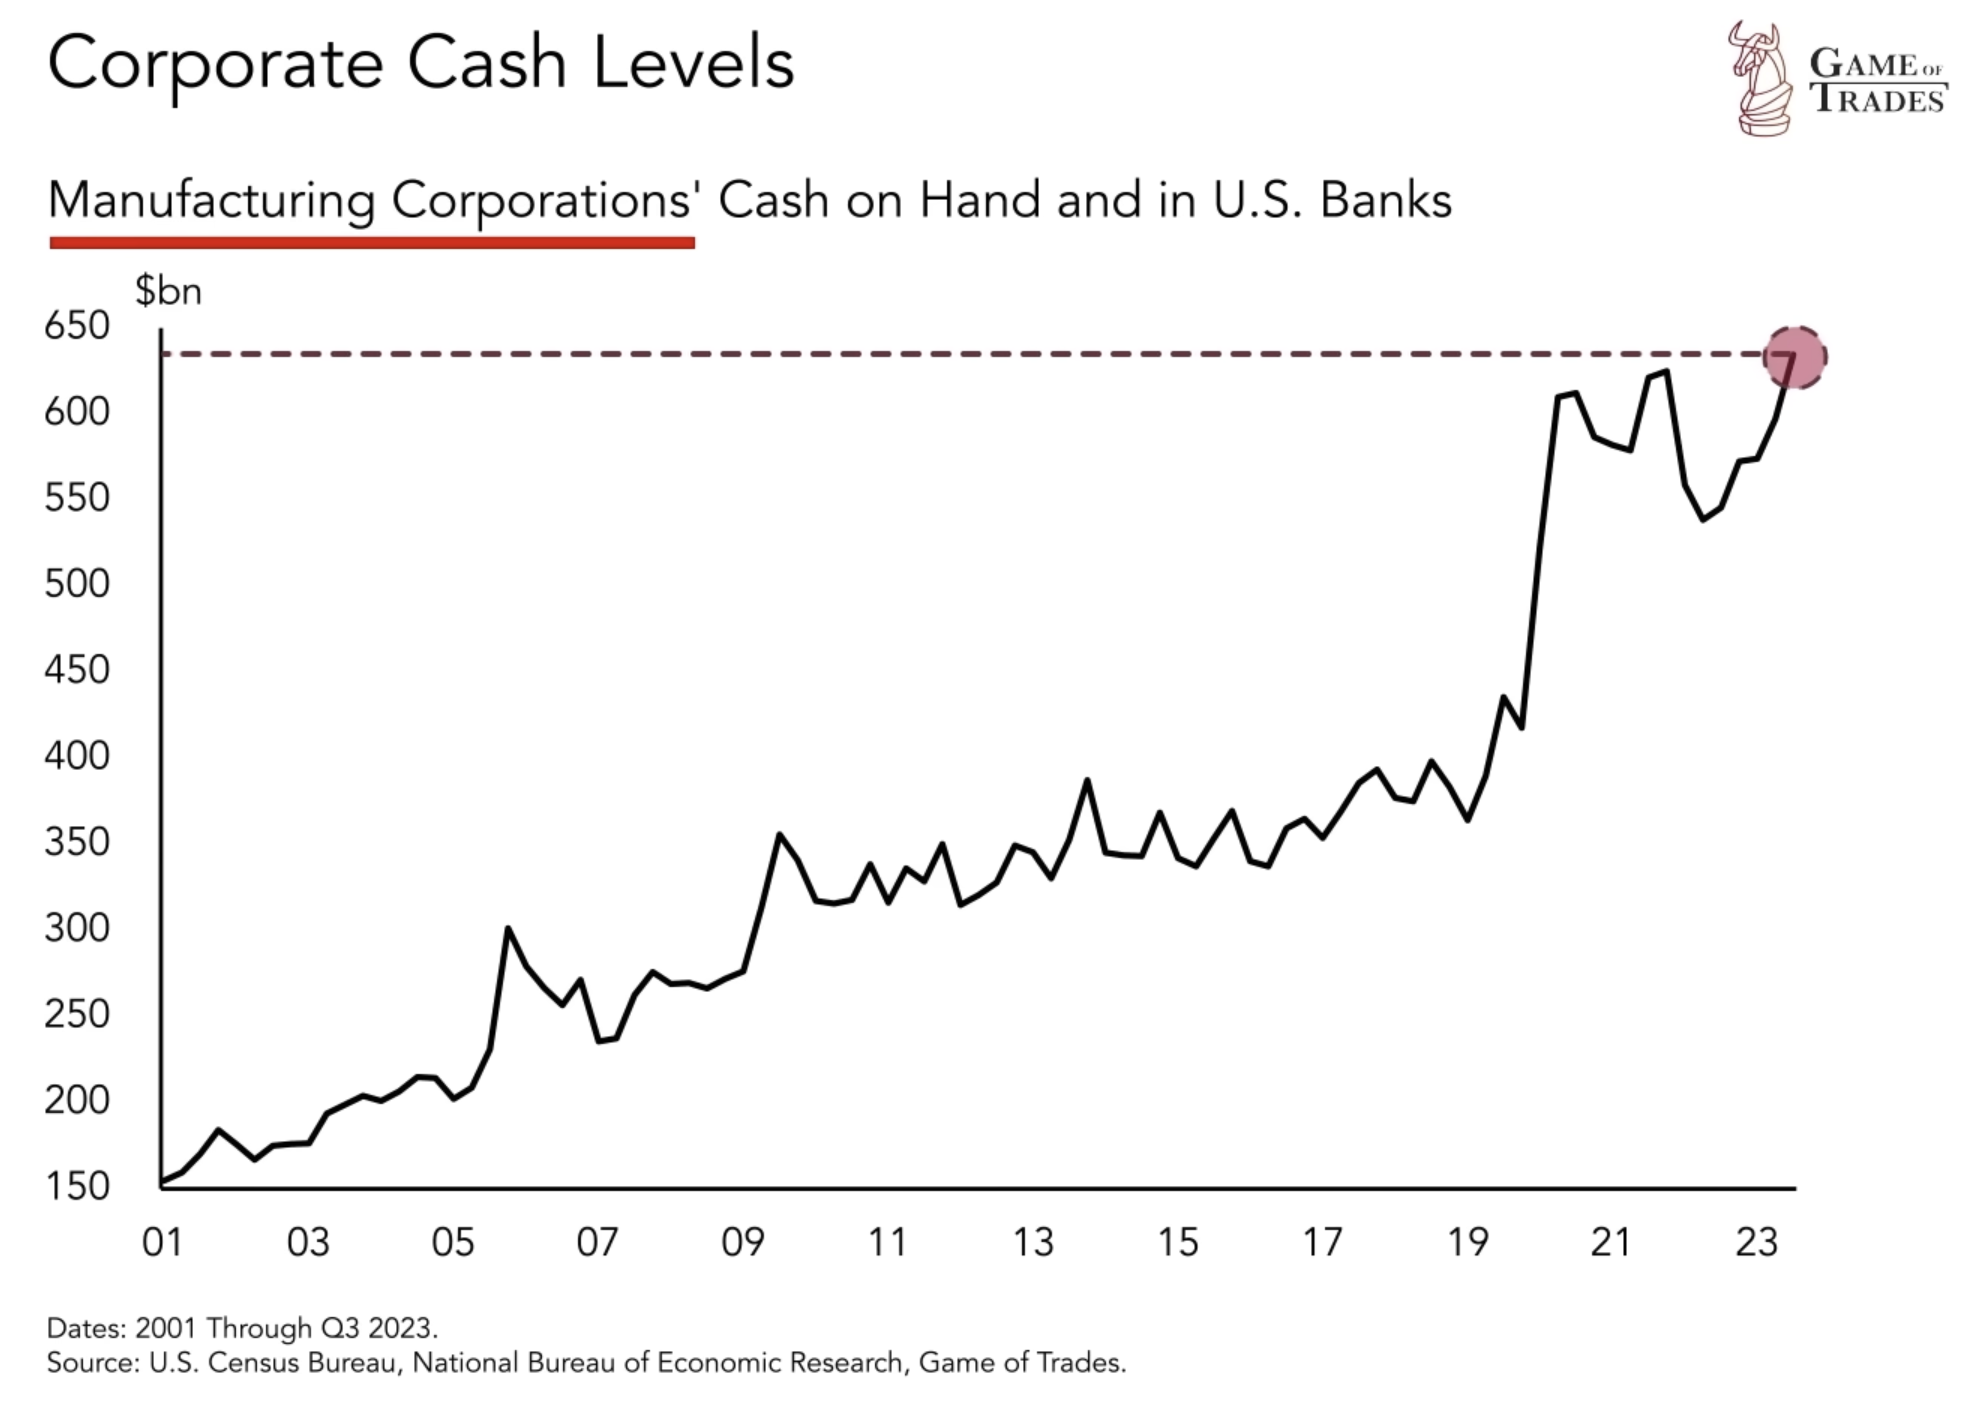 Corporate Cash Levels Data